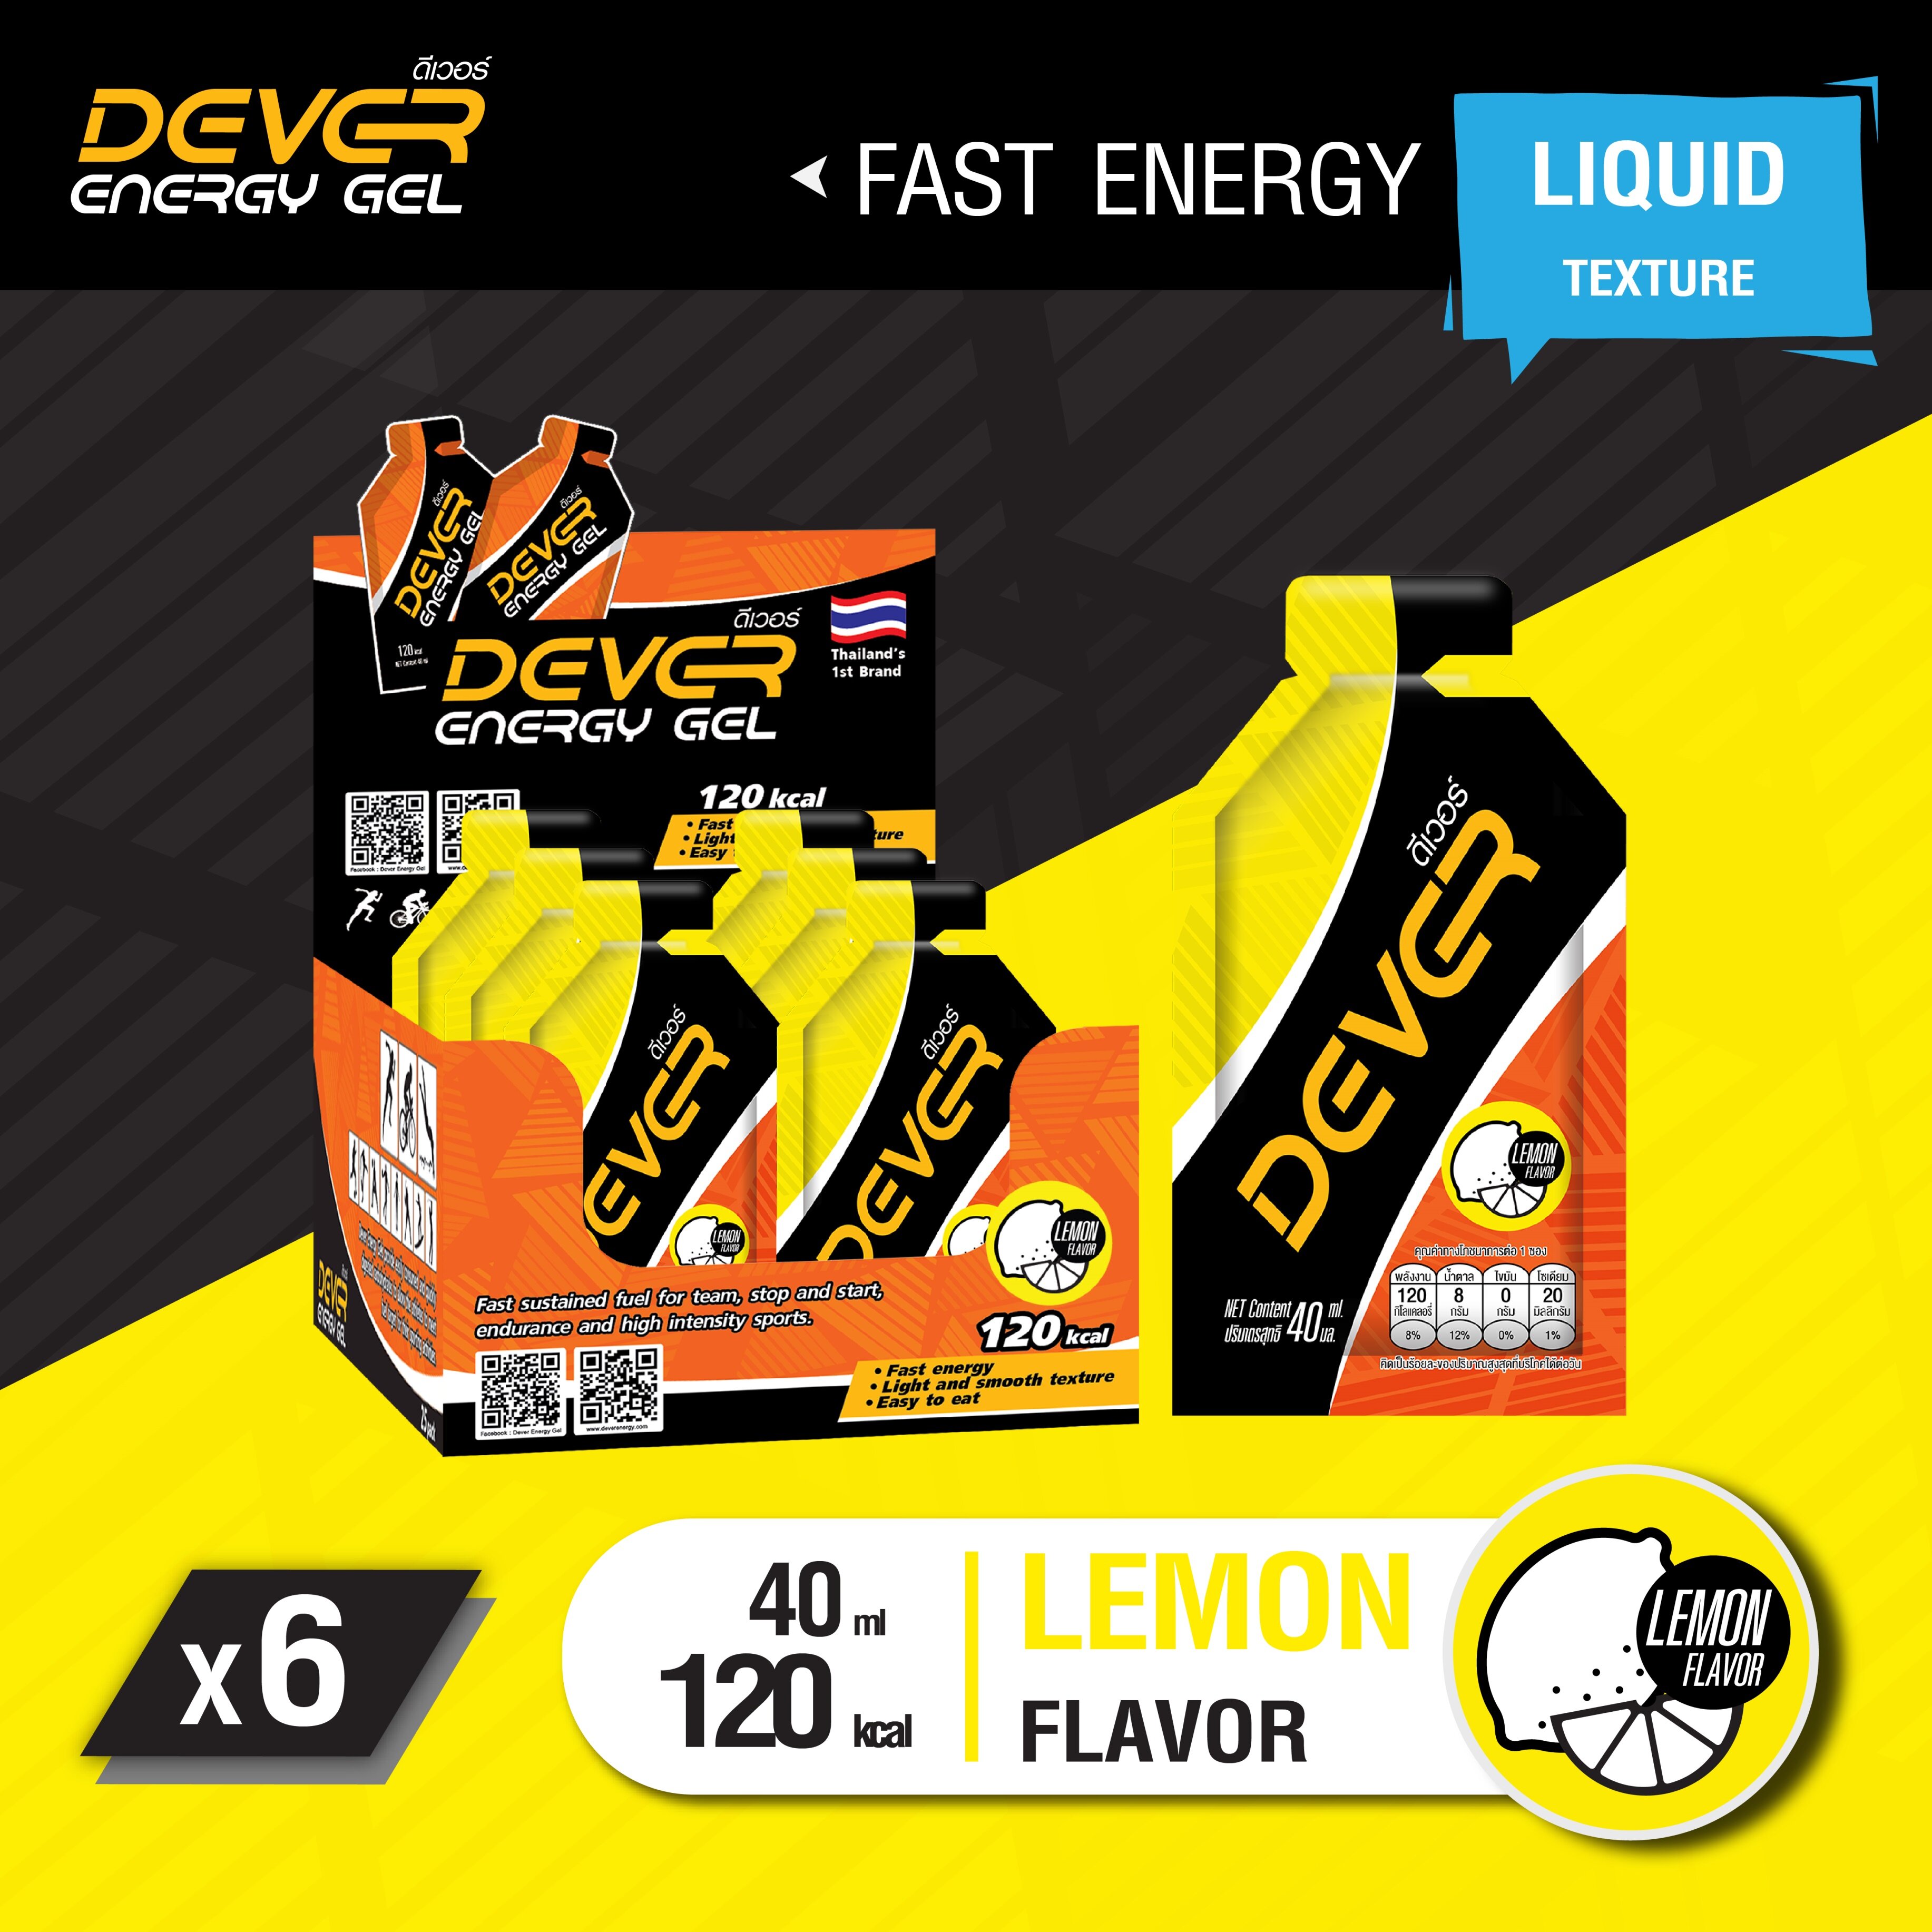 DEVER energy gel (vital source of energy) ดีเวอร์ เจลให้พลังงาน เจลพลังงาน เจลเพิ่มพลังงาน เกลือแร่ สำหรับนักกีฬา นักวิ่ง ออกกำลังกาย > 40 ML มะนาว 6 ซอง